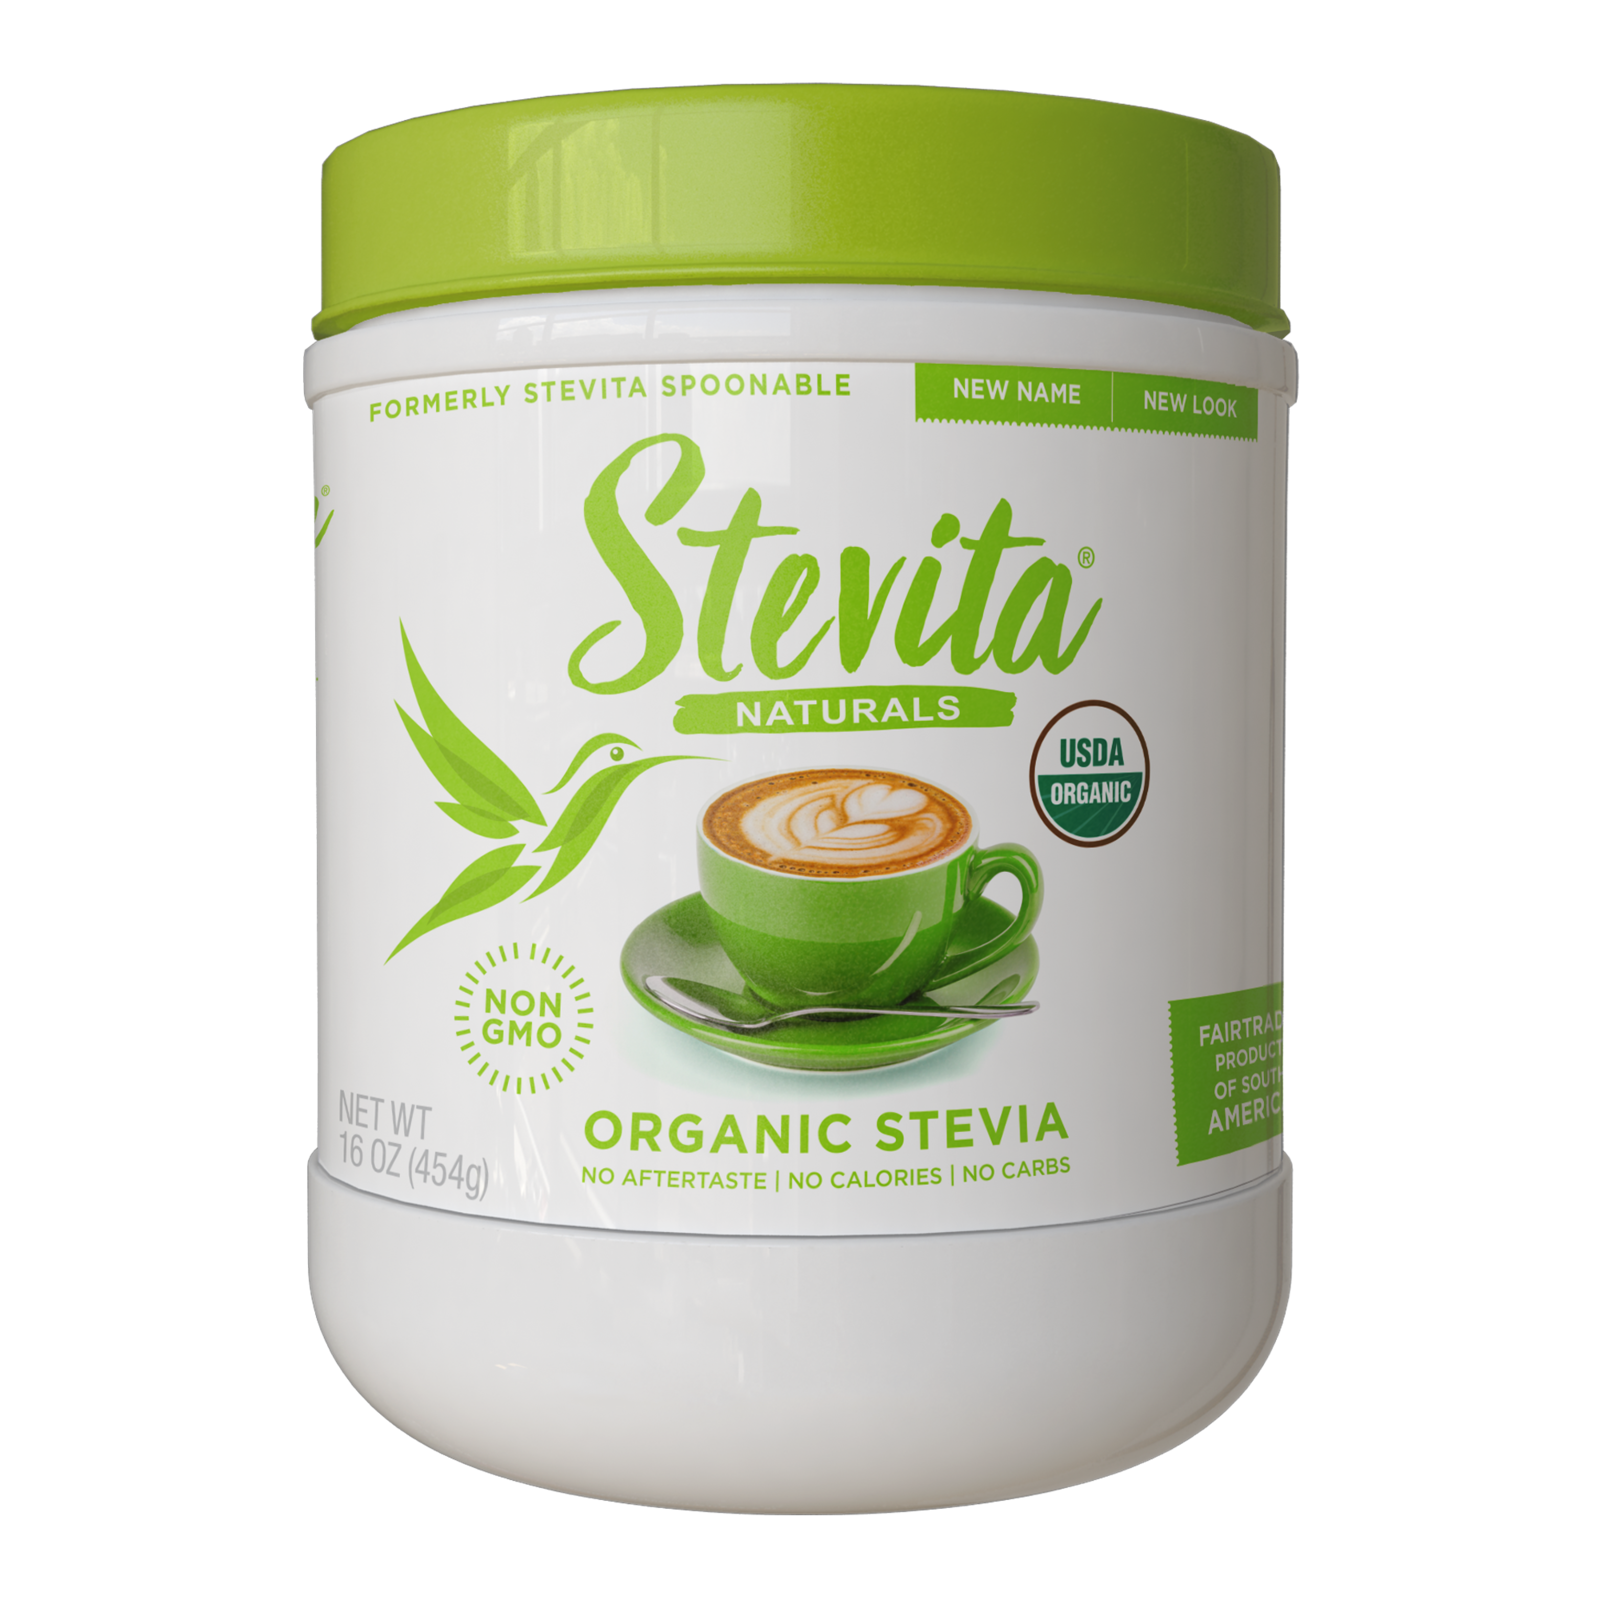 PureVia Stevia Sweetener Case